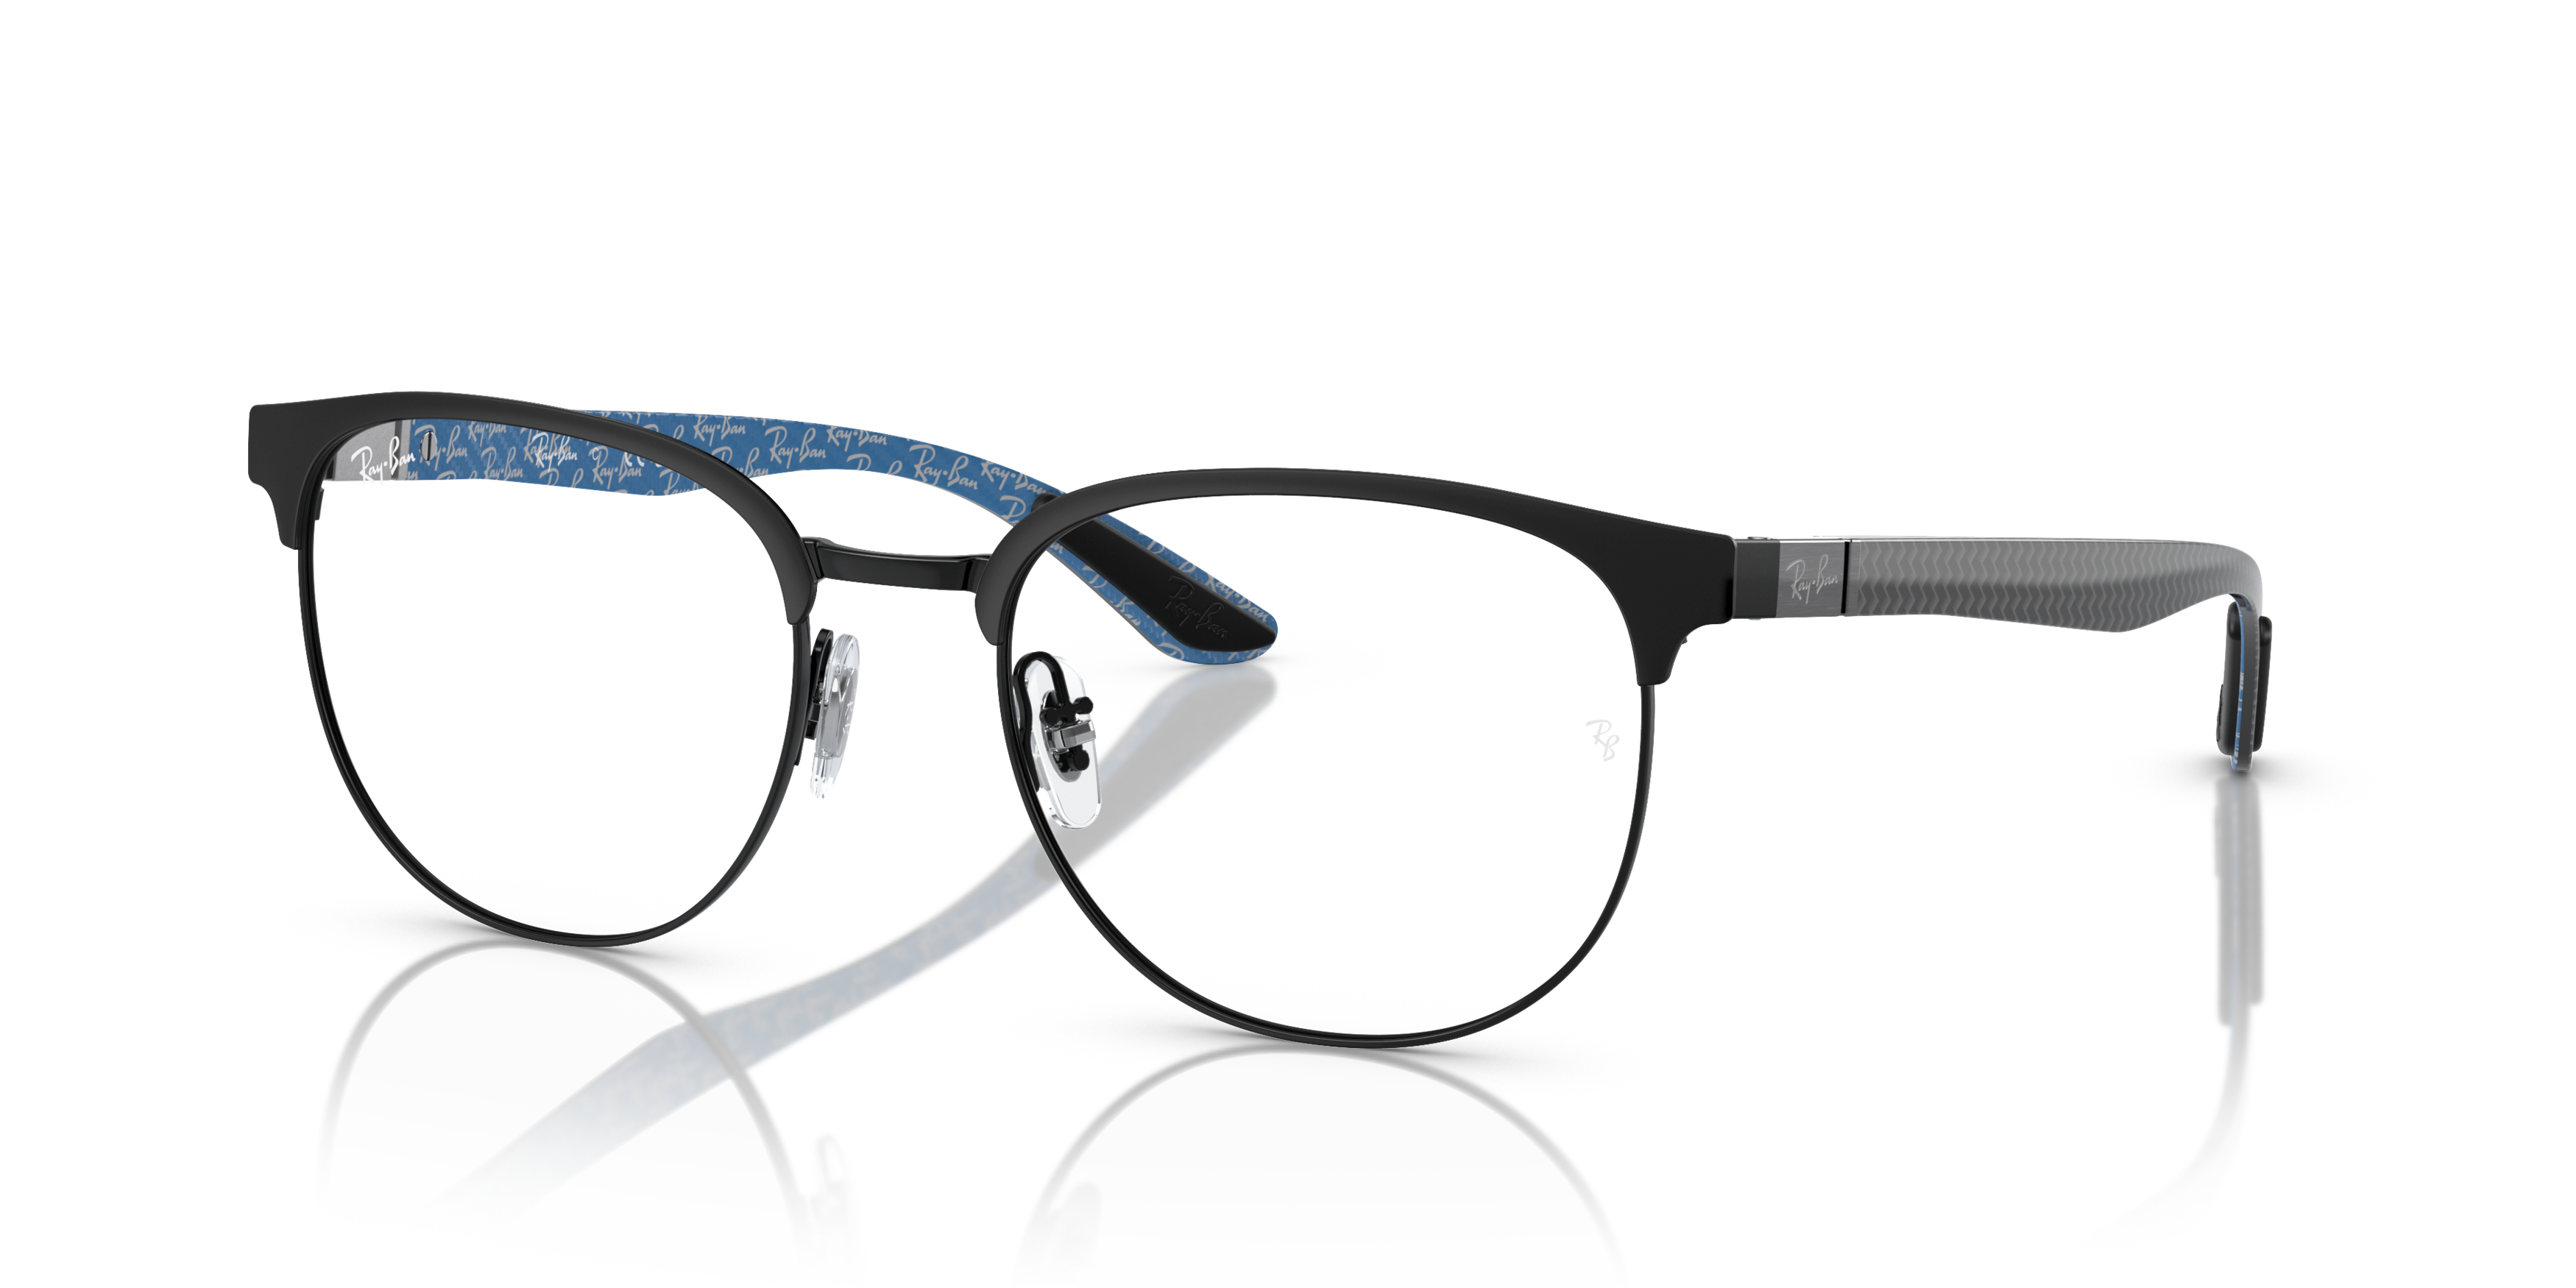 Angle_Left01 Ray-Ban RX 8422 Glasses Transparent / Black